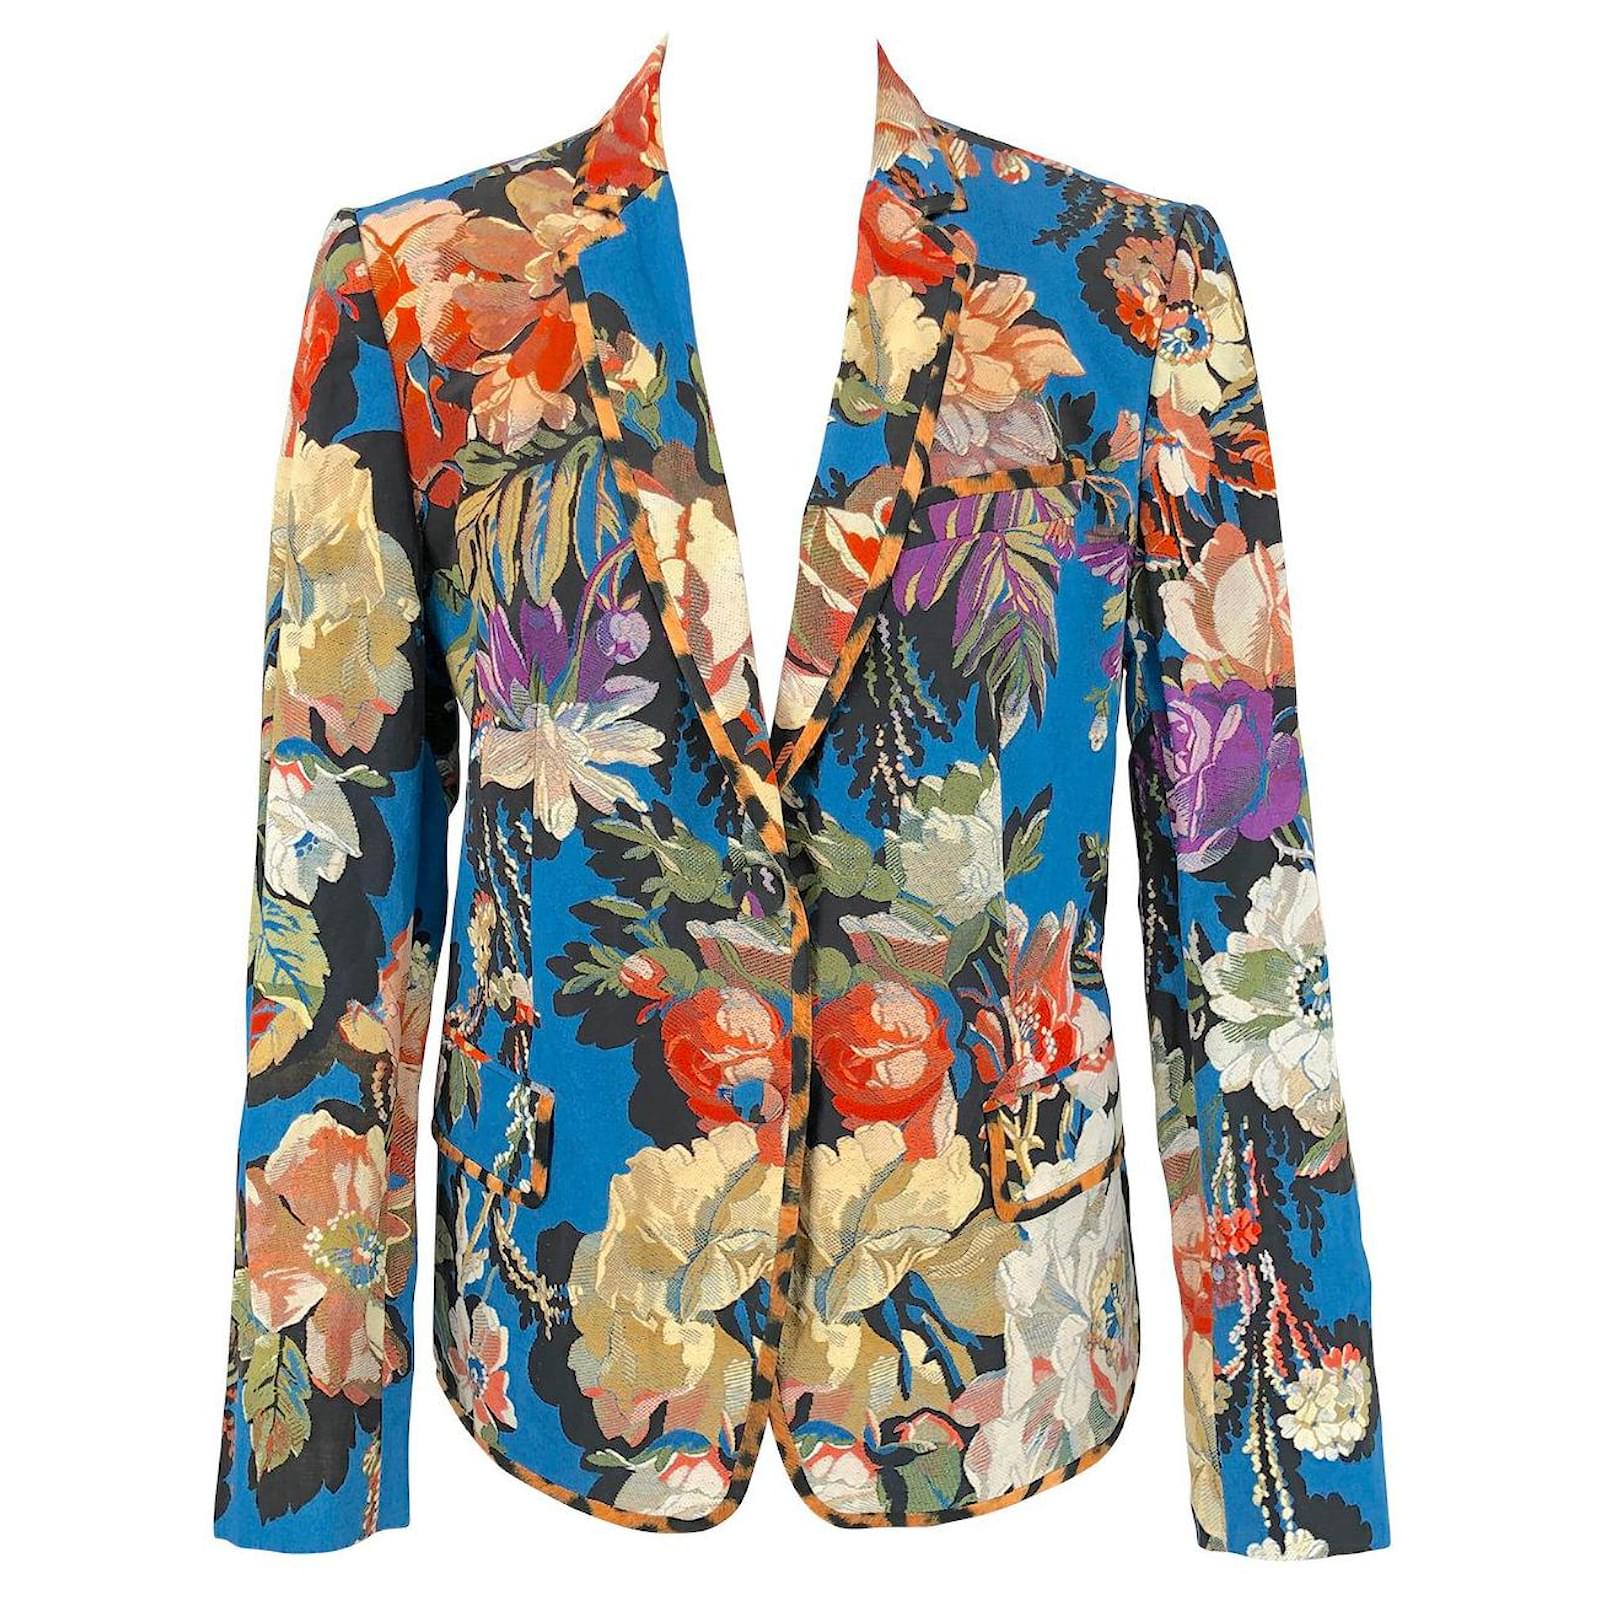 Dries van Noten Ruberta Tris jacket In blue floral-jacquard Cotton ref ...